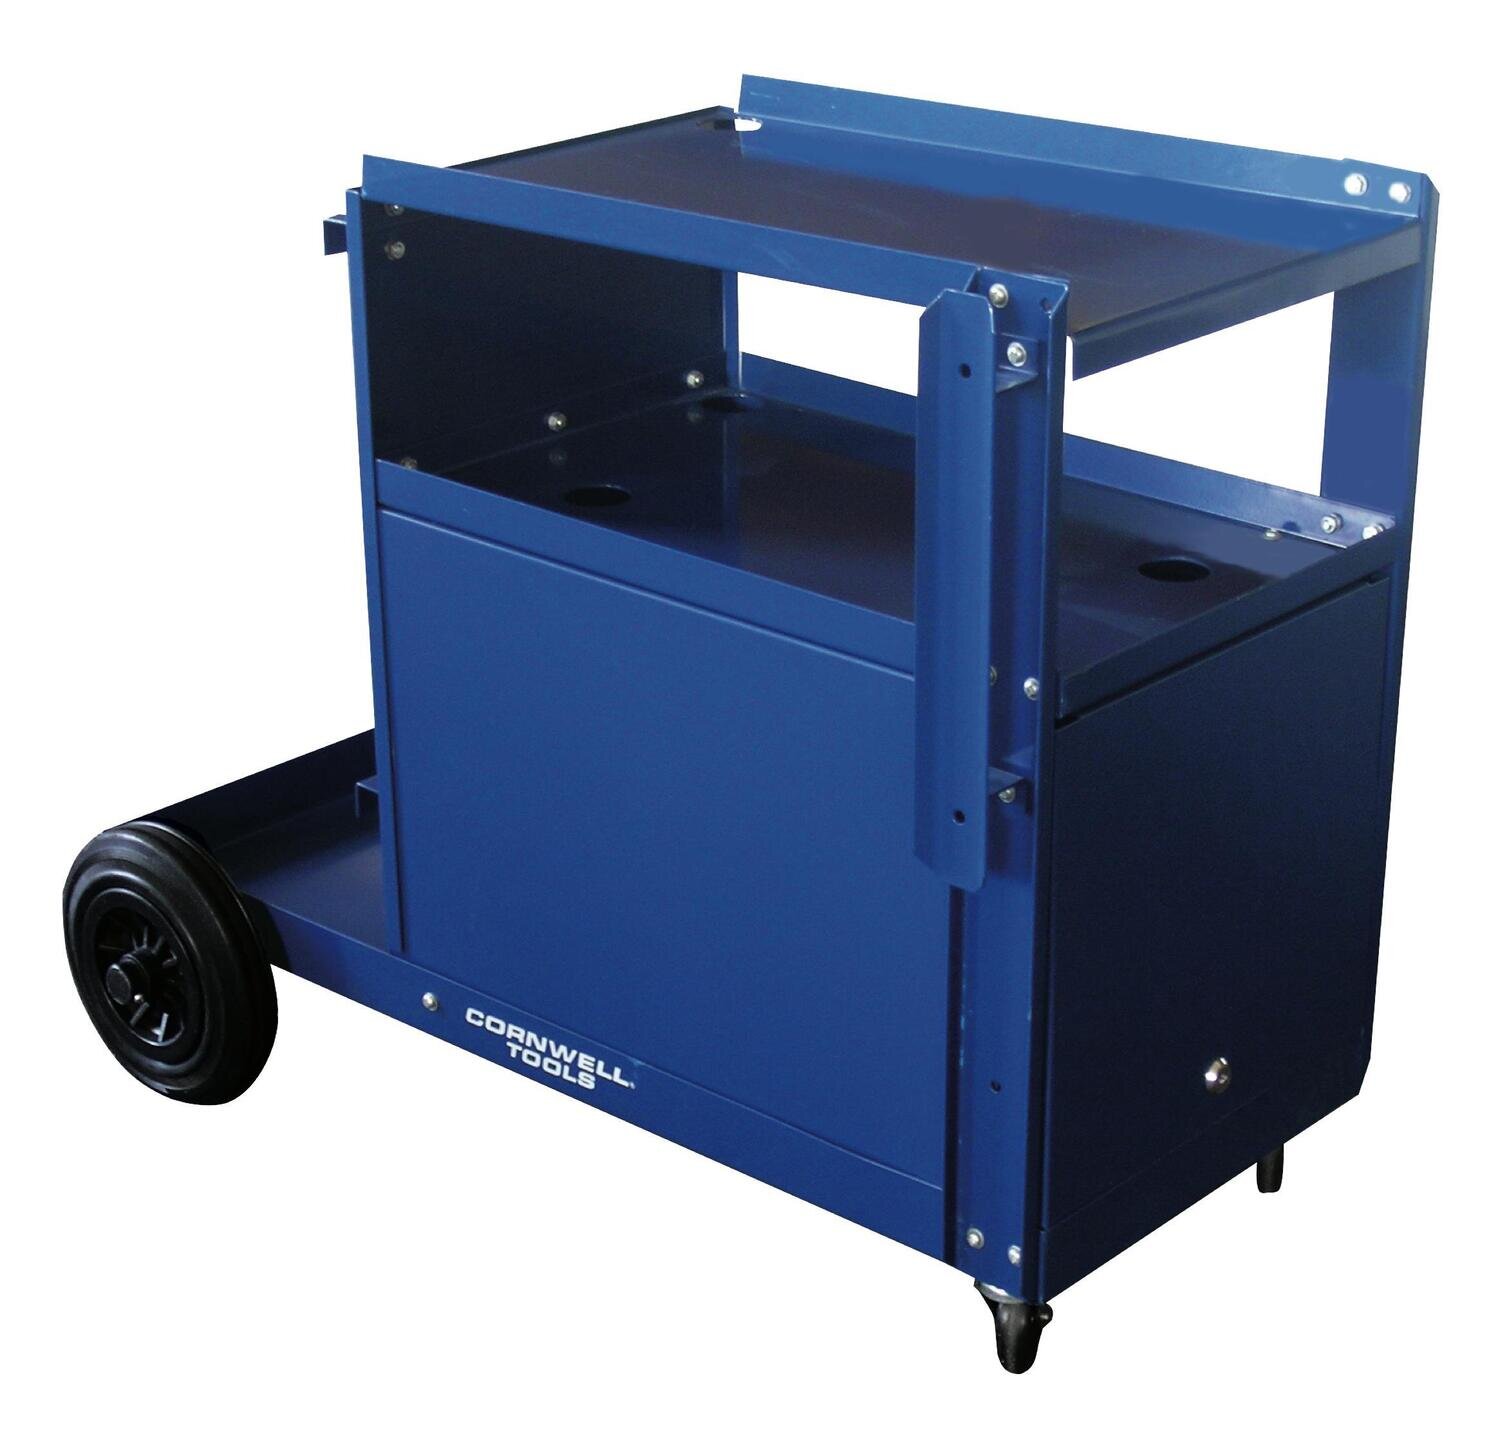 CWEMWCBC - MIG Welding Cart - Blue